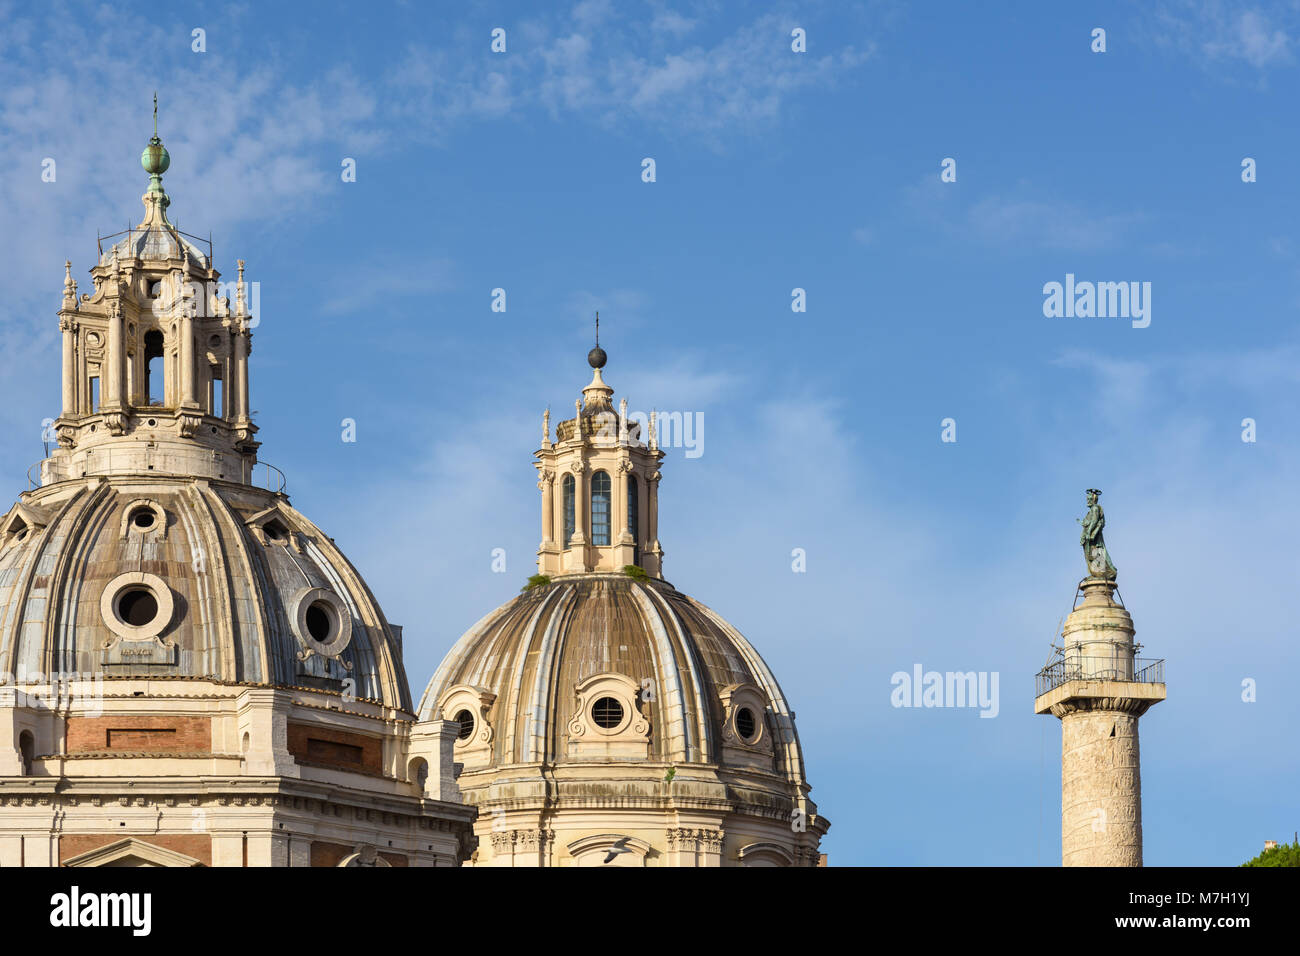 Trajan's Column & domes of Churches, Rome, Italy Stock Photo